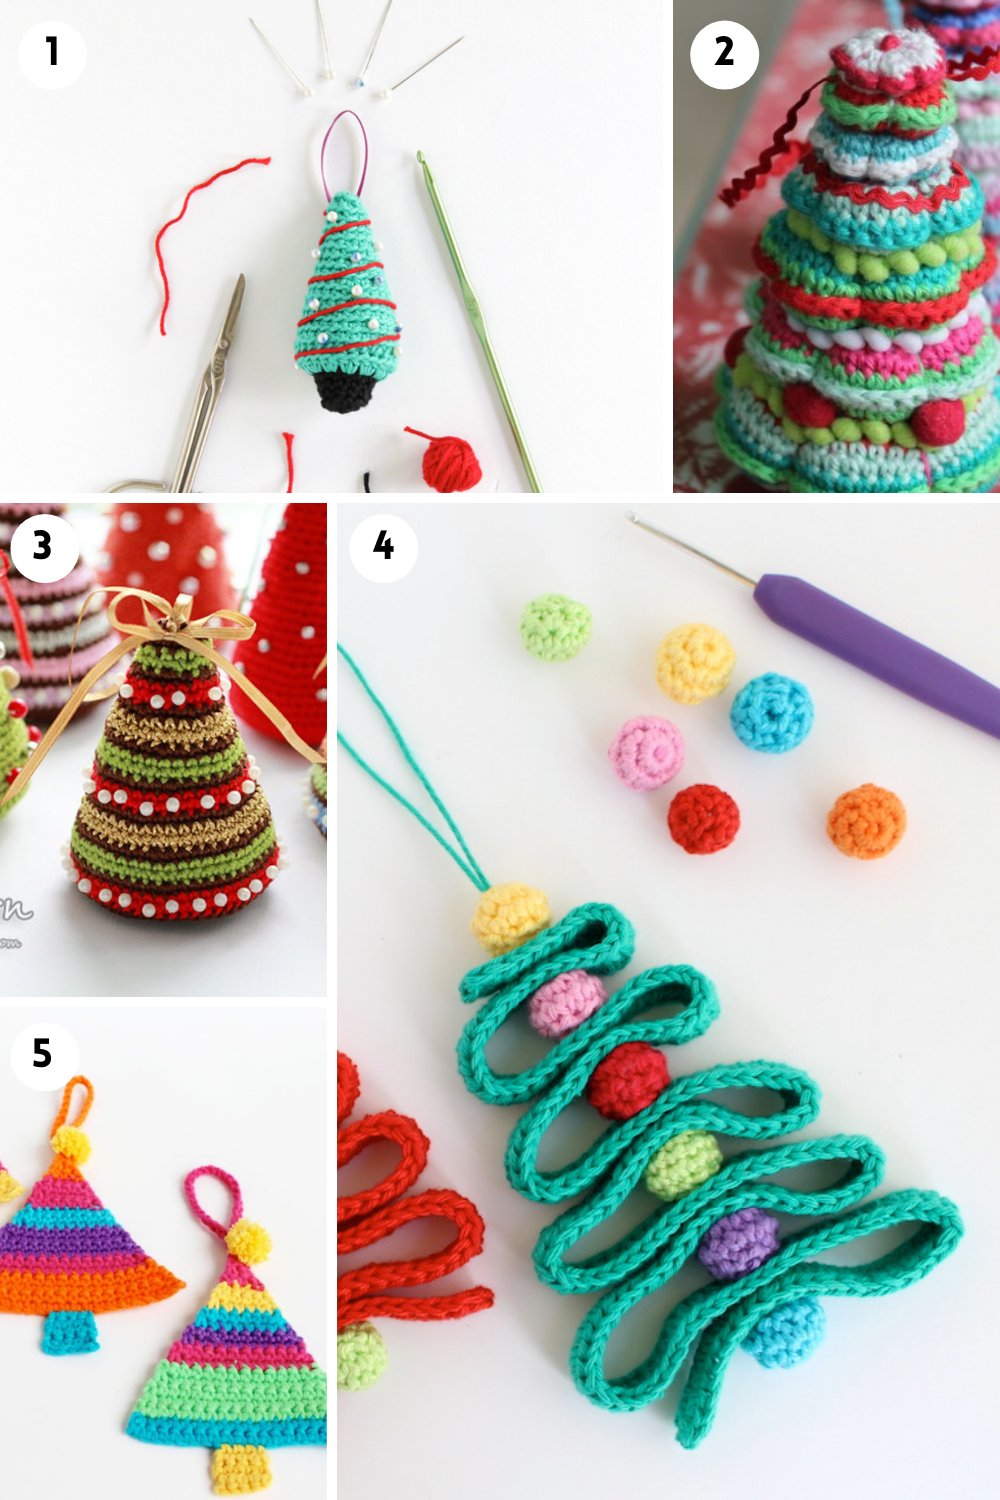 Crochet Christmas Tree Decorations